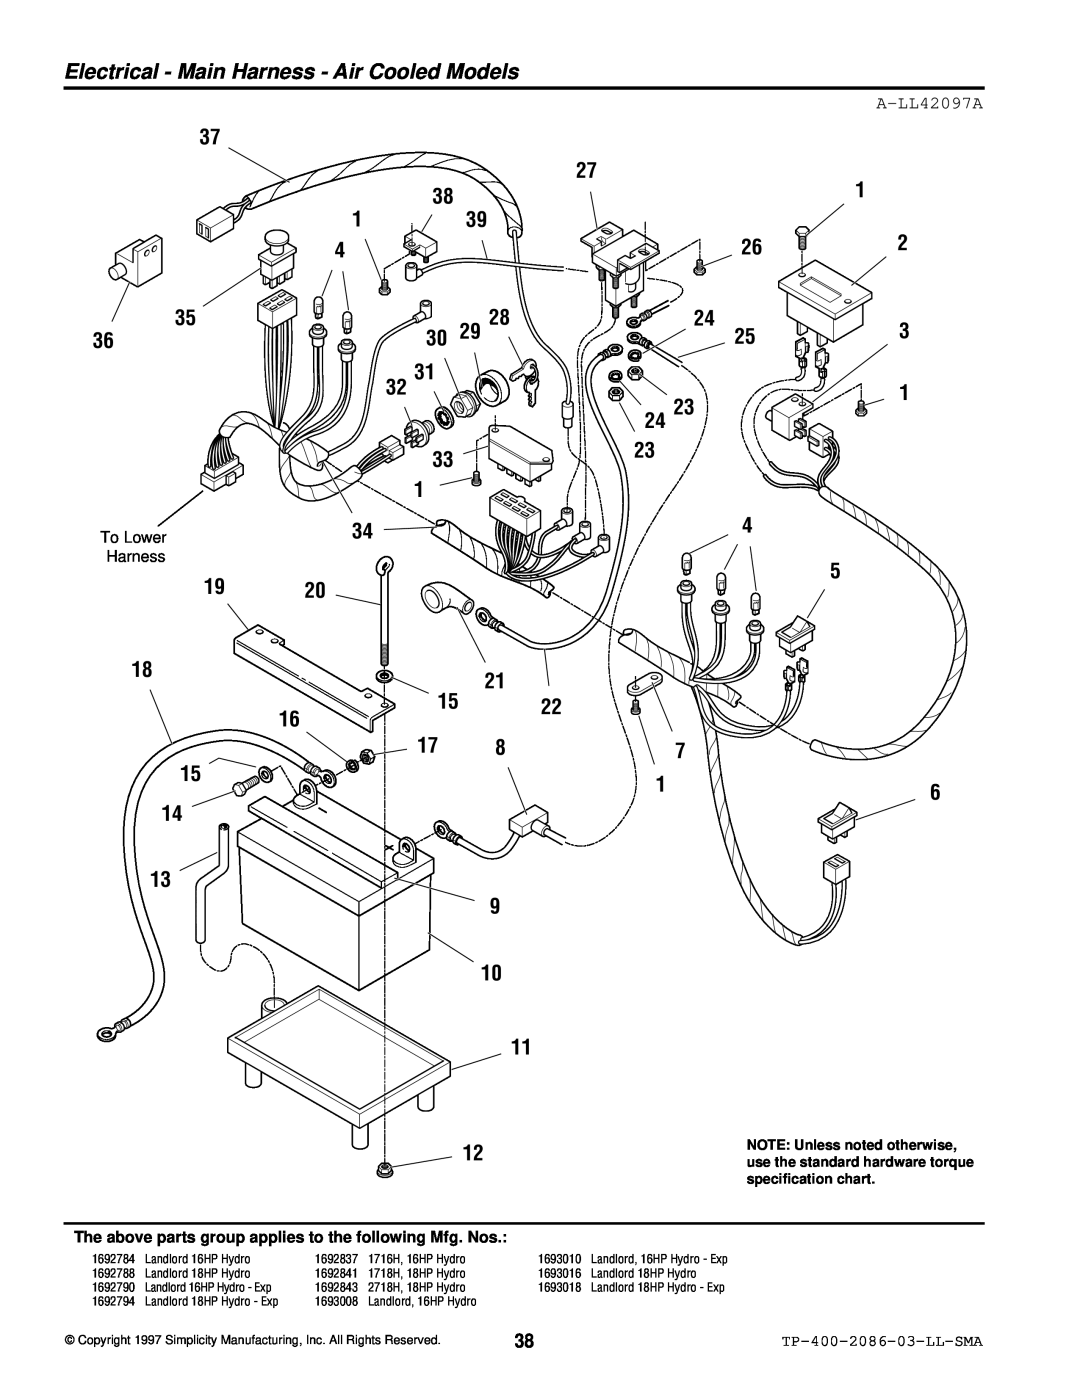 Simplicity 2700, 1700 manual Electrical - Main Harness - Air Cooled Models, Ek Cel, Ed Ec, Dg E 